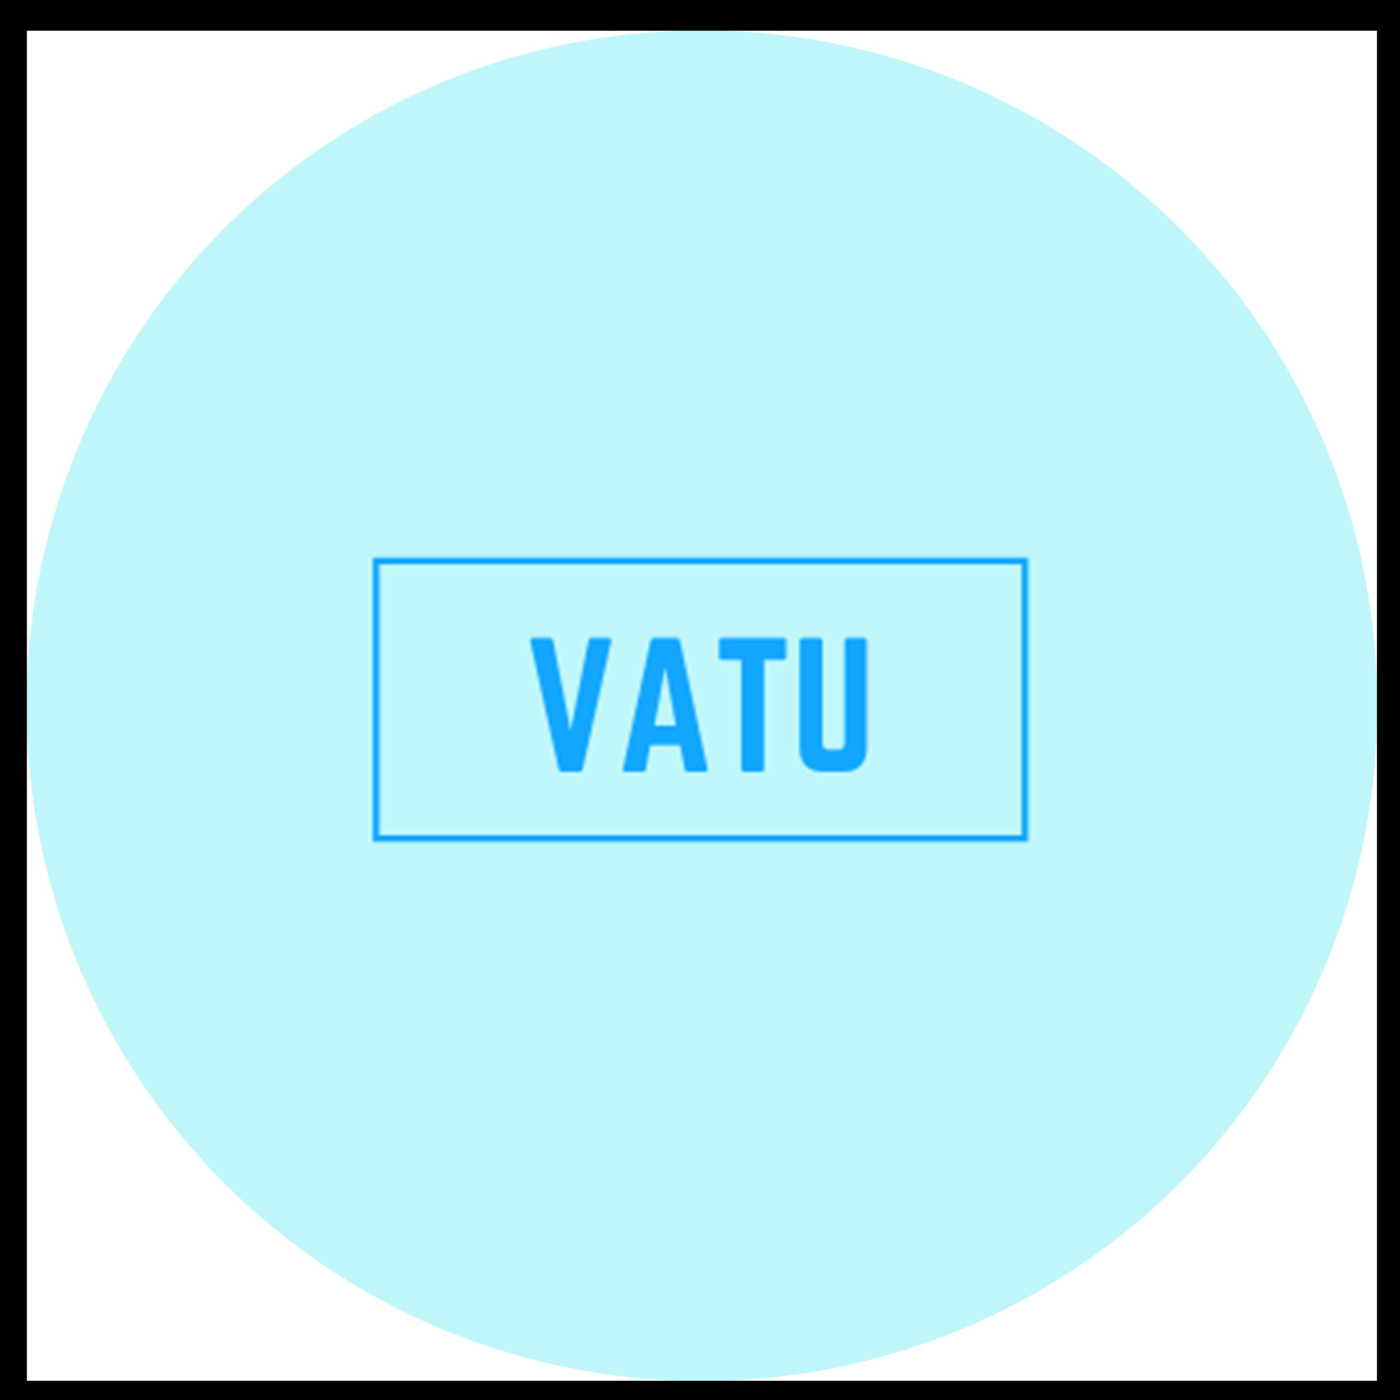 Project Vatu